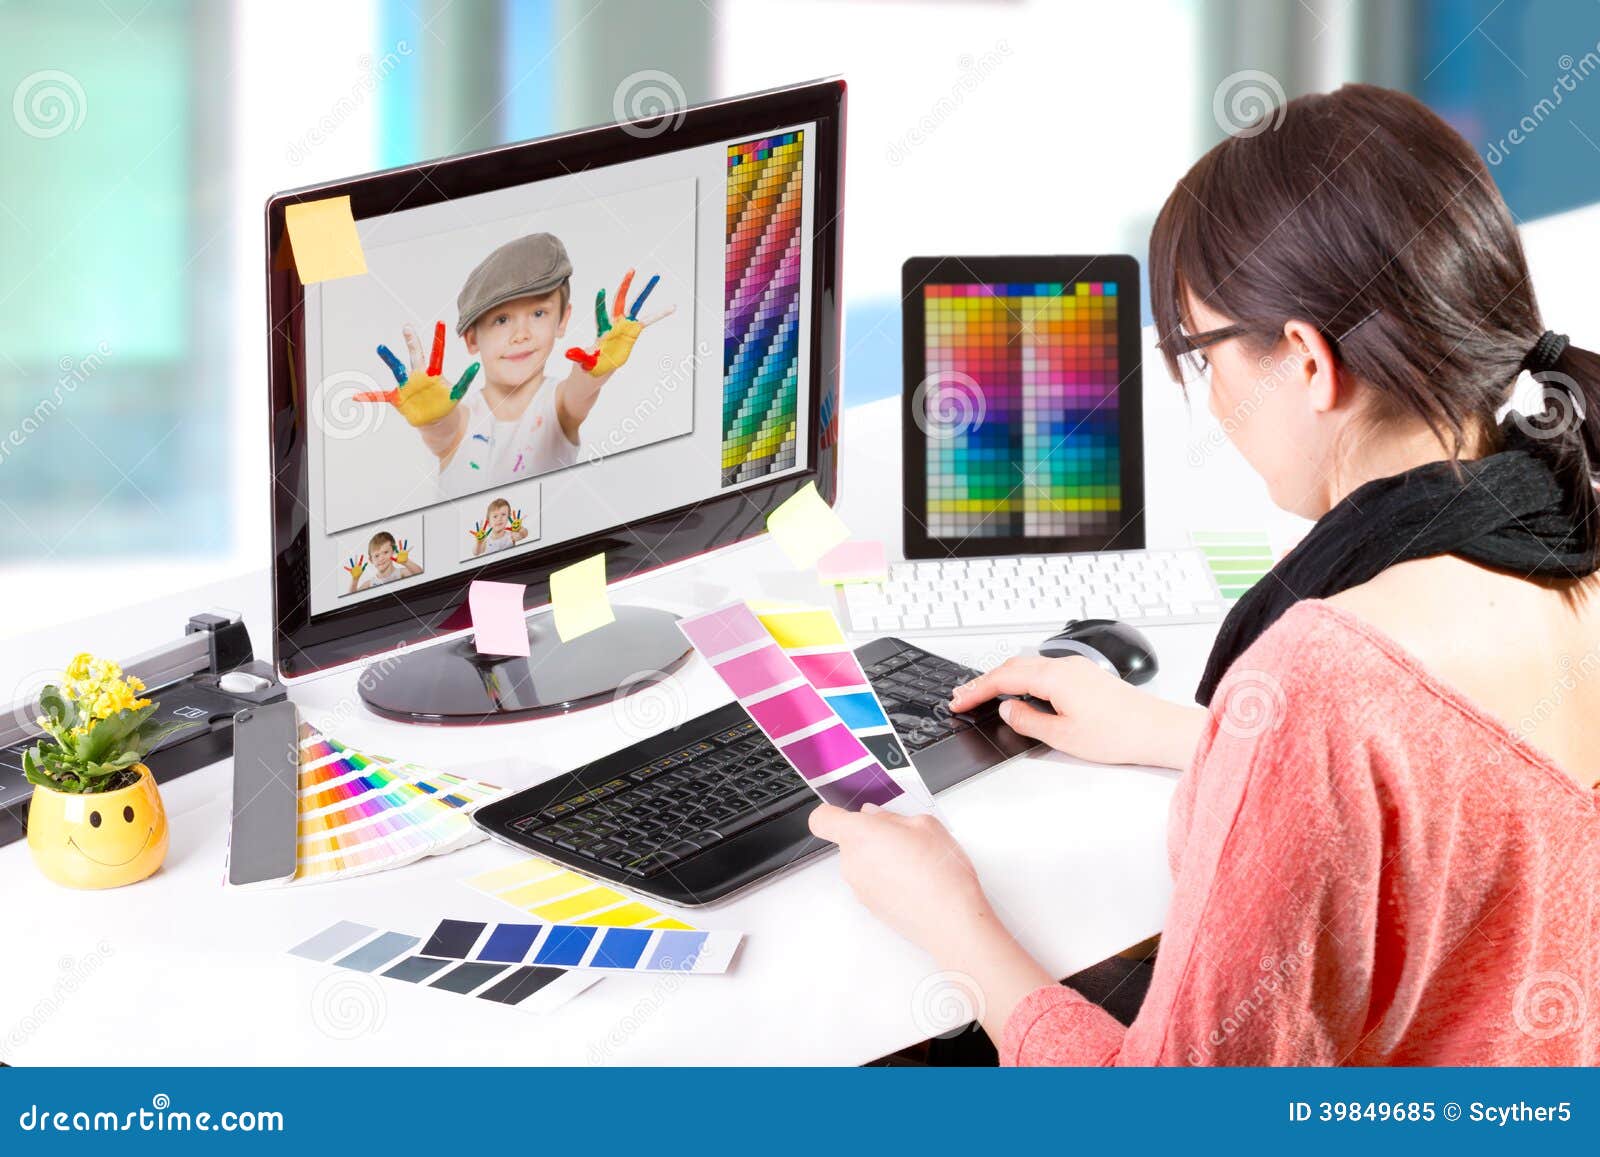 Graphic Designer At Work. Color Samples. Stock Photo - Image: 39849685  Graphic designer at work. Color samples.